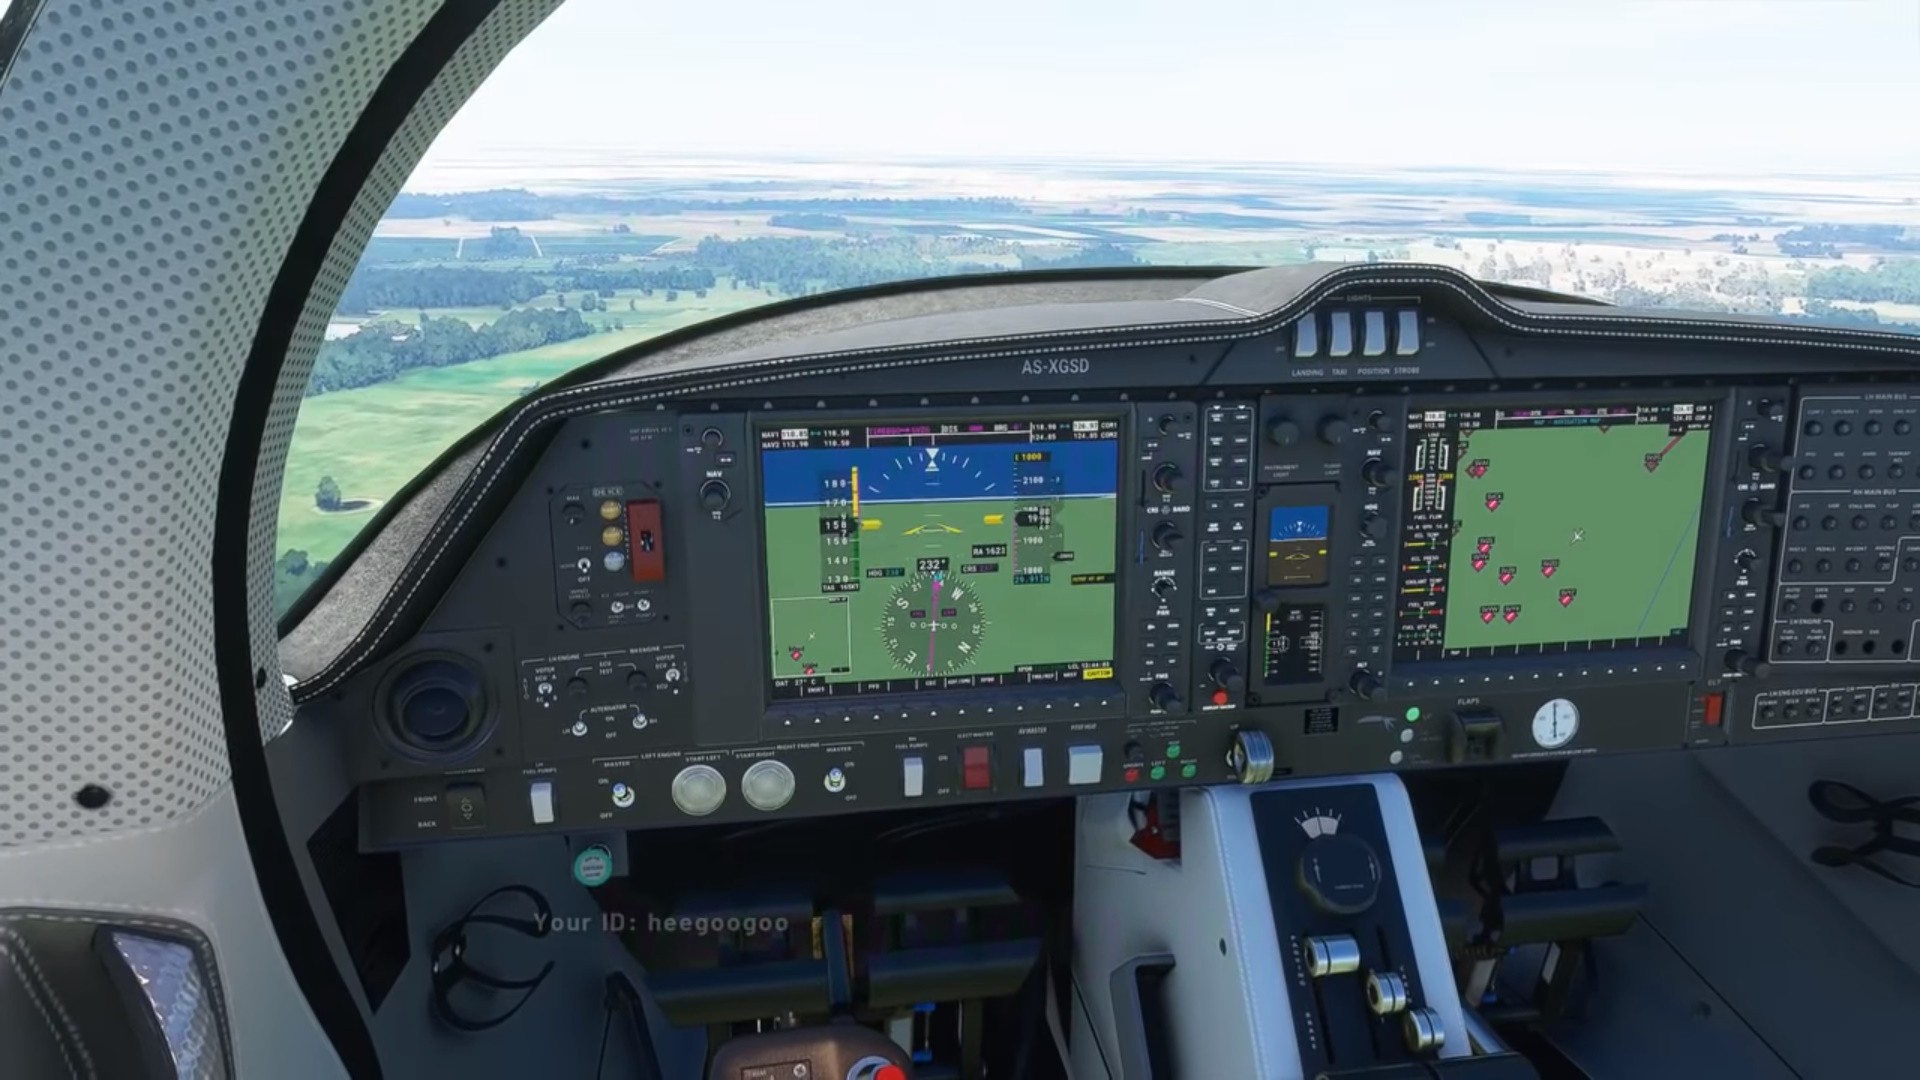 A Controller for a Mobile Flight Simulator